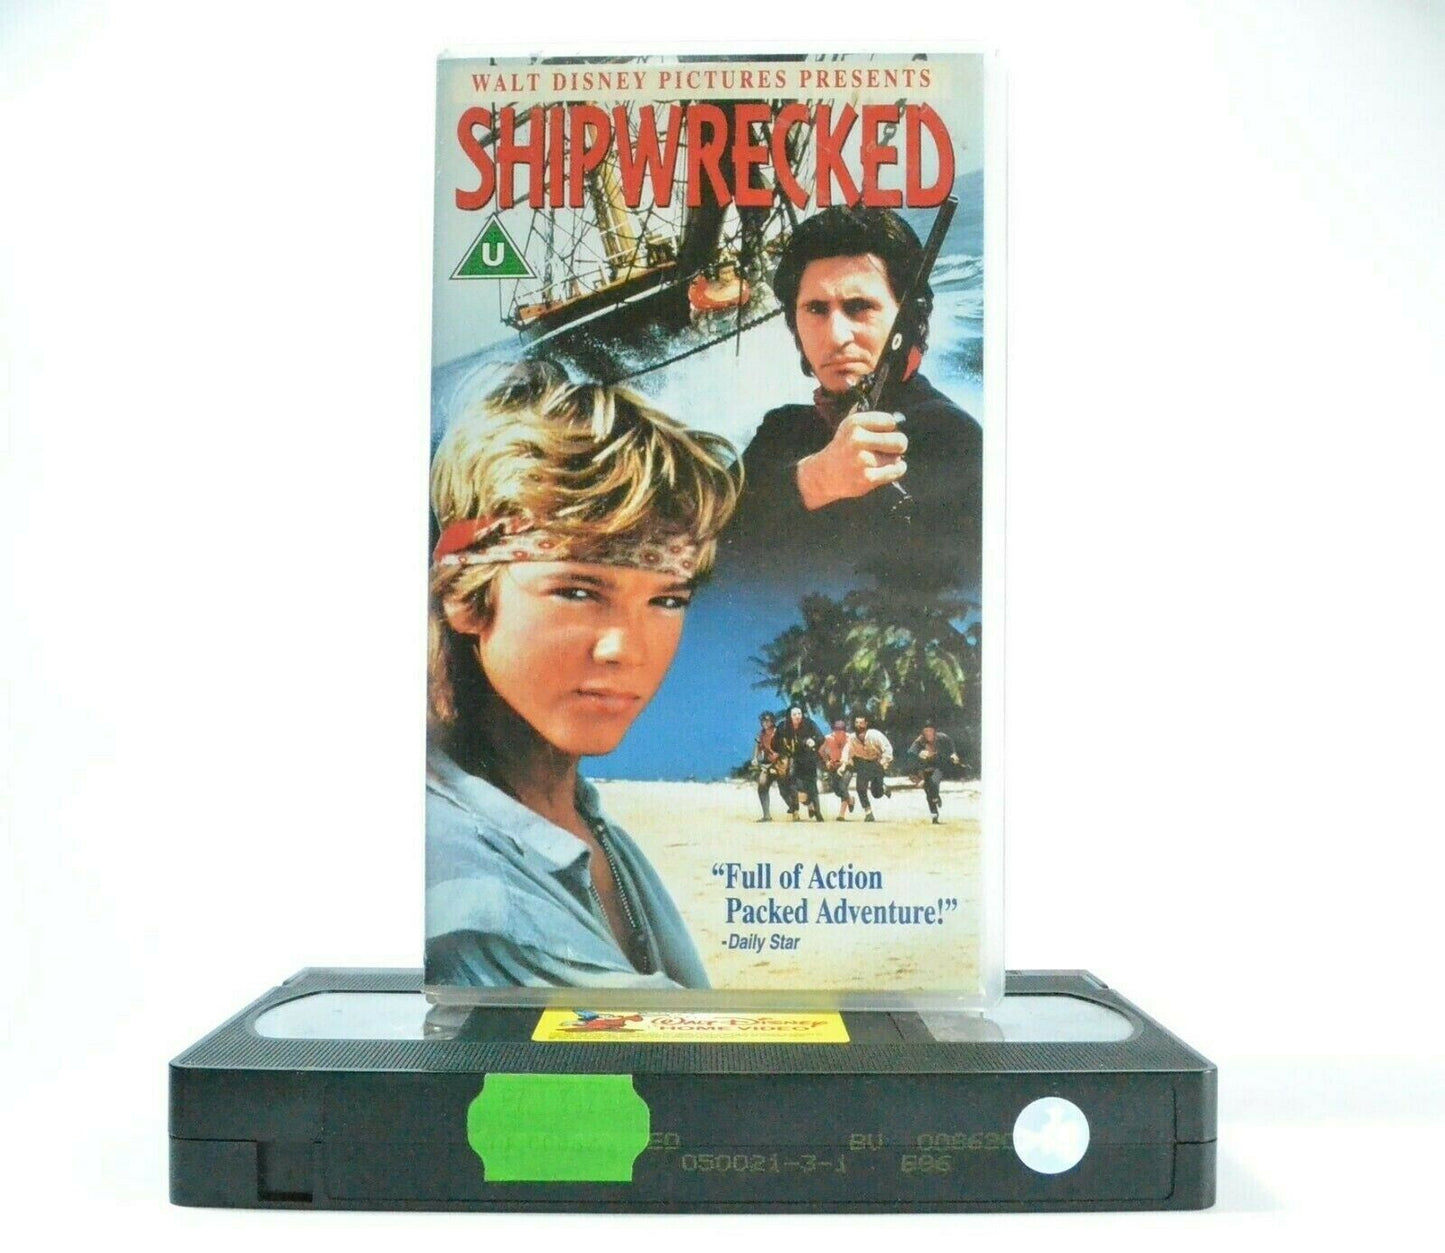 Shipwrecked: Based On O.Falck-Ytter Book - Big Adventure Film - Children's - VHS-